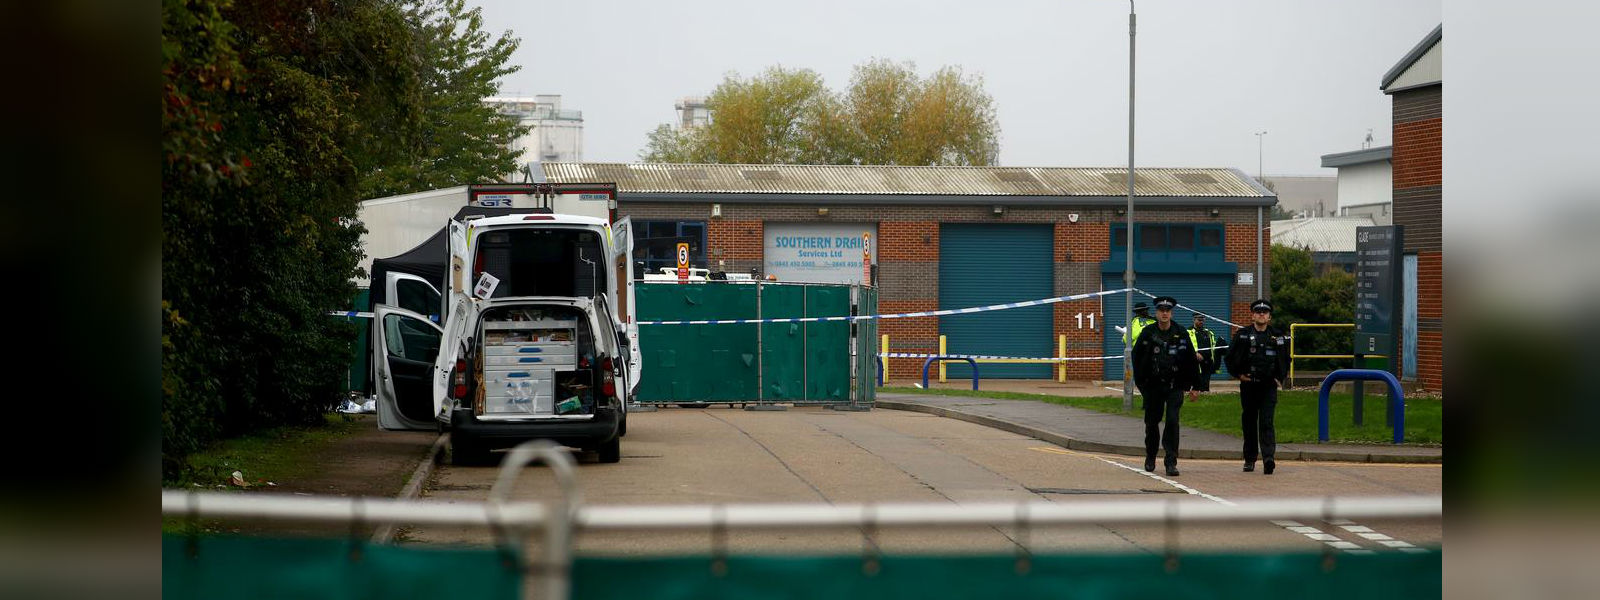 British police find 39 dead in truck container, arrest driver